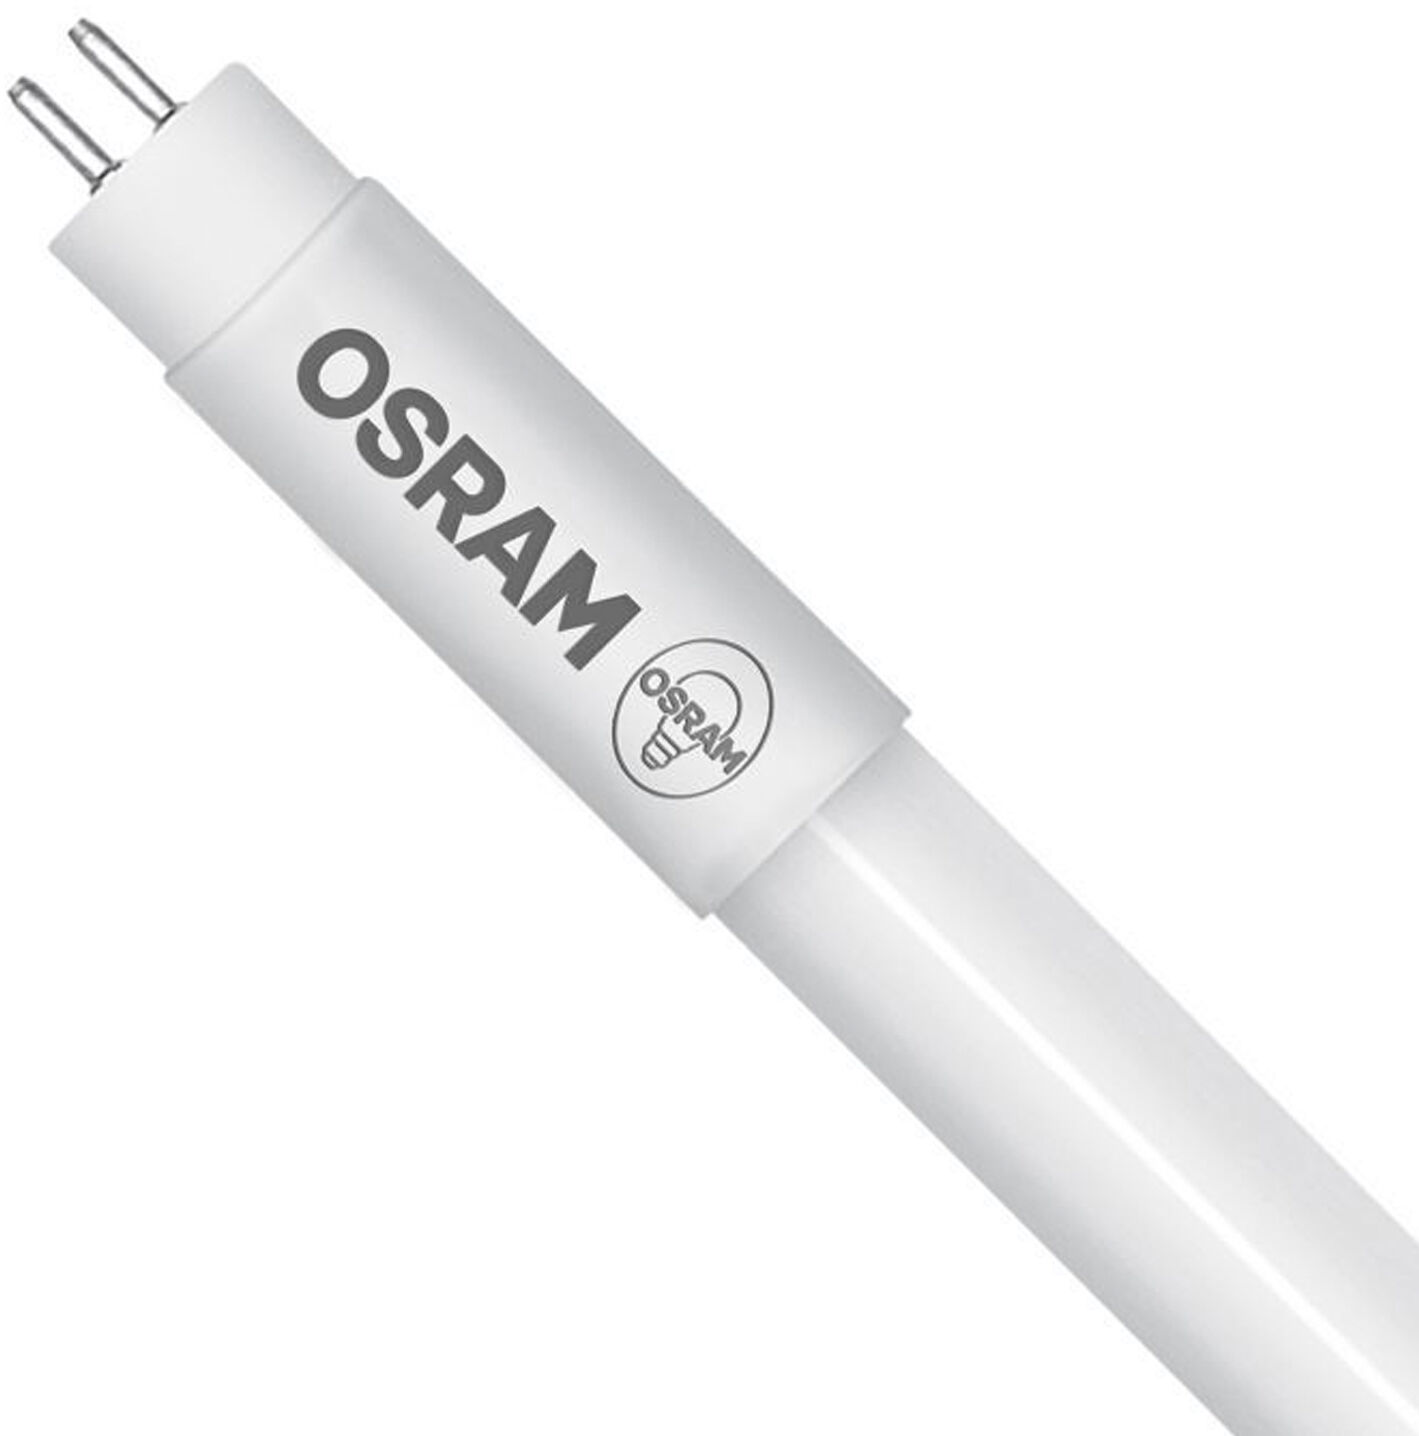 Osram SubstiTUBE LED T5 (Mains) High Efficiency 8W - 830 Ciepła Biel 55cm Zamienne 14W